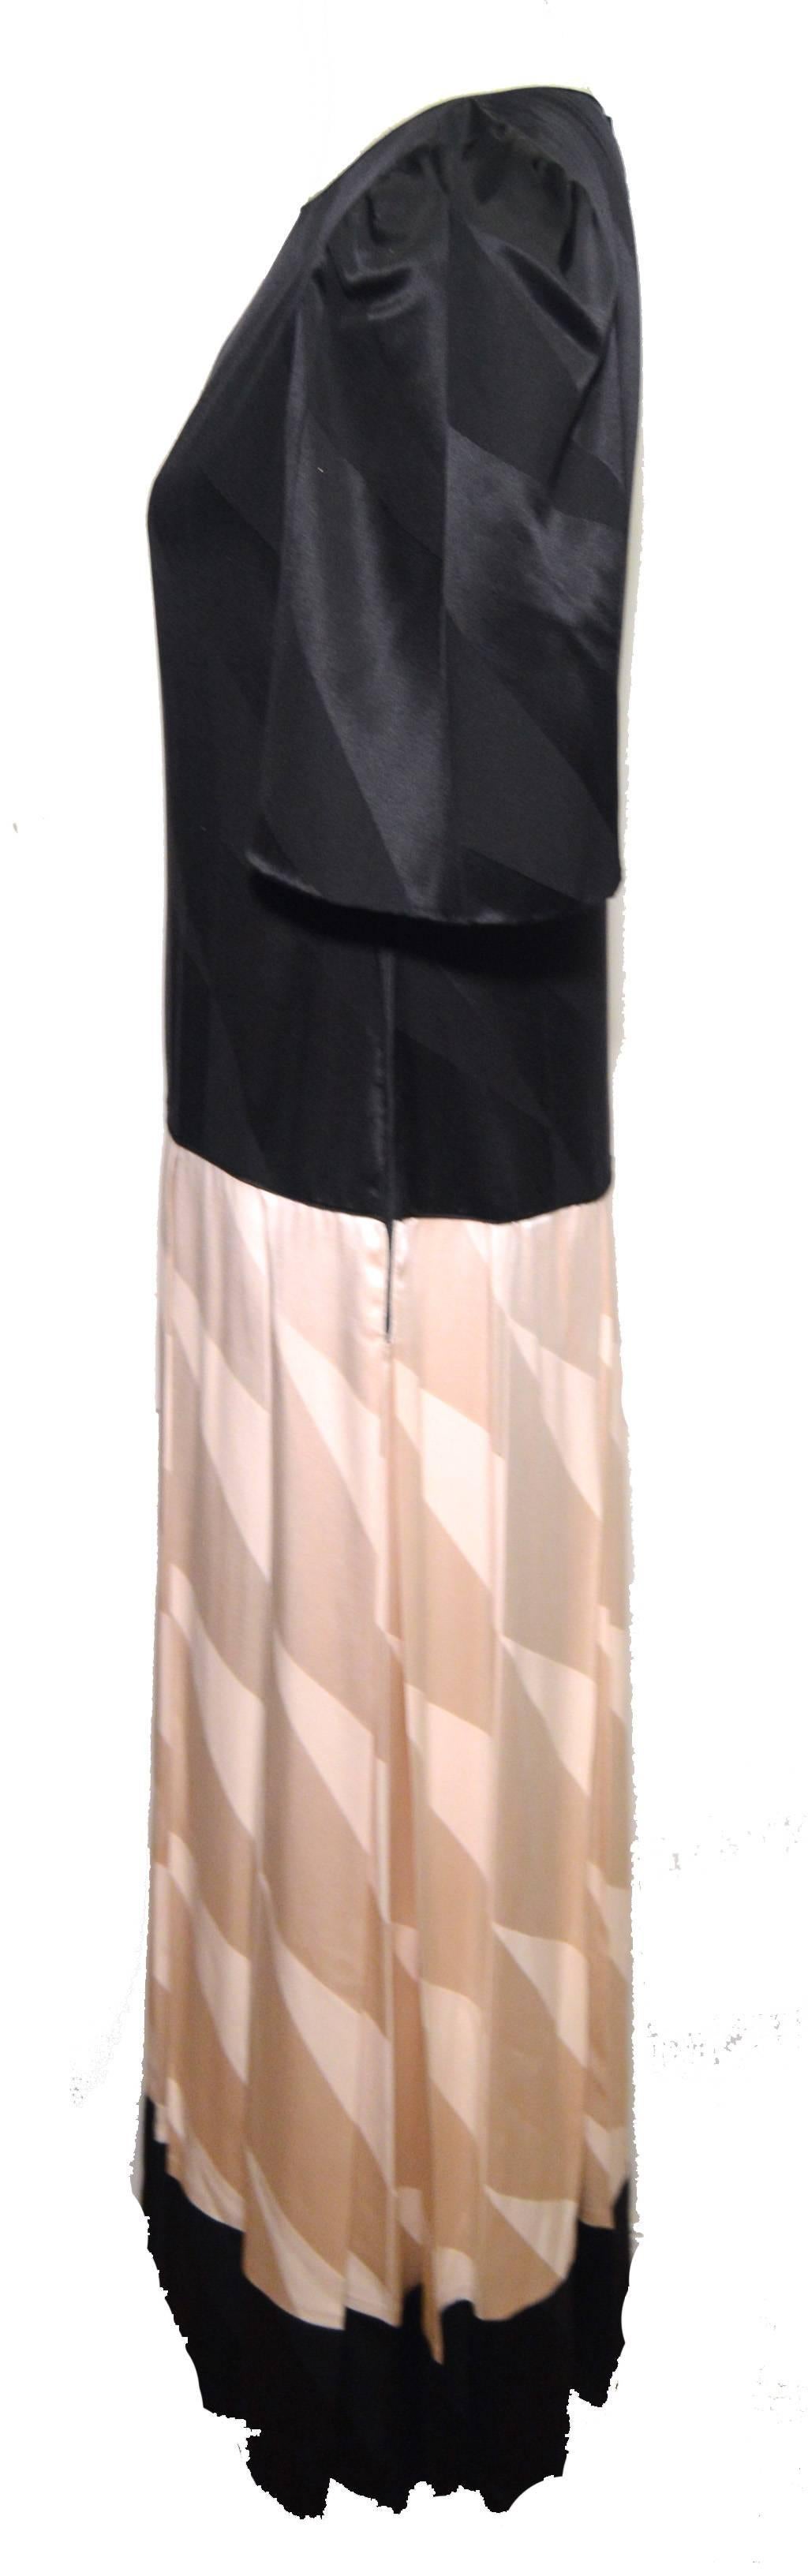 Women's Mary McFadden Vintage 1980s Black and White Silk Drop Waist Dress Size 8